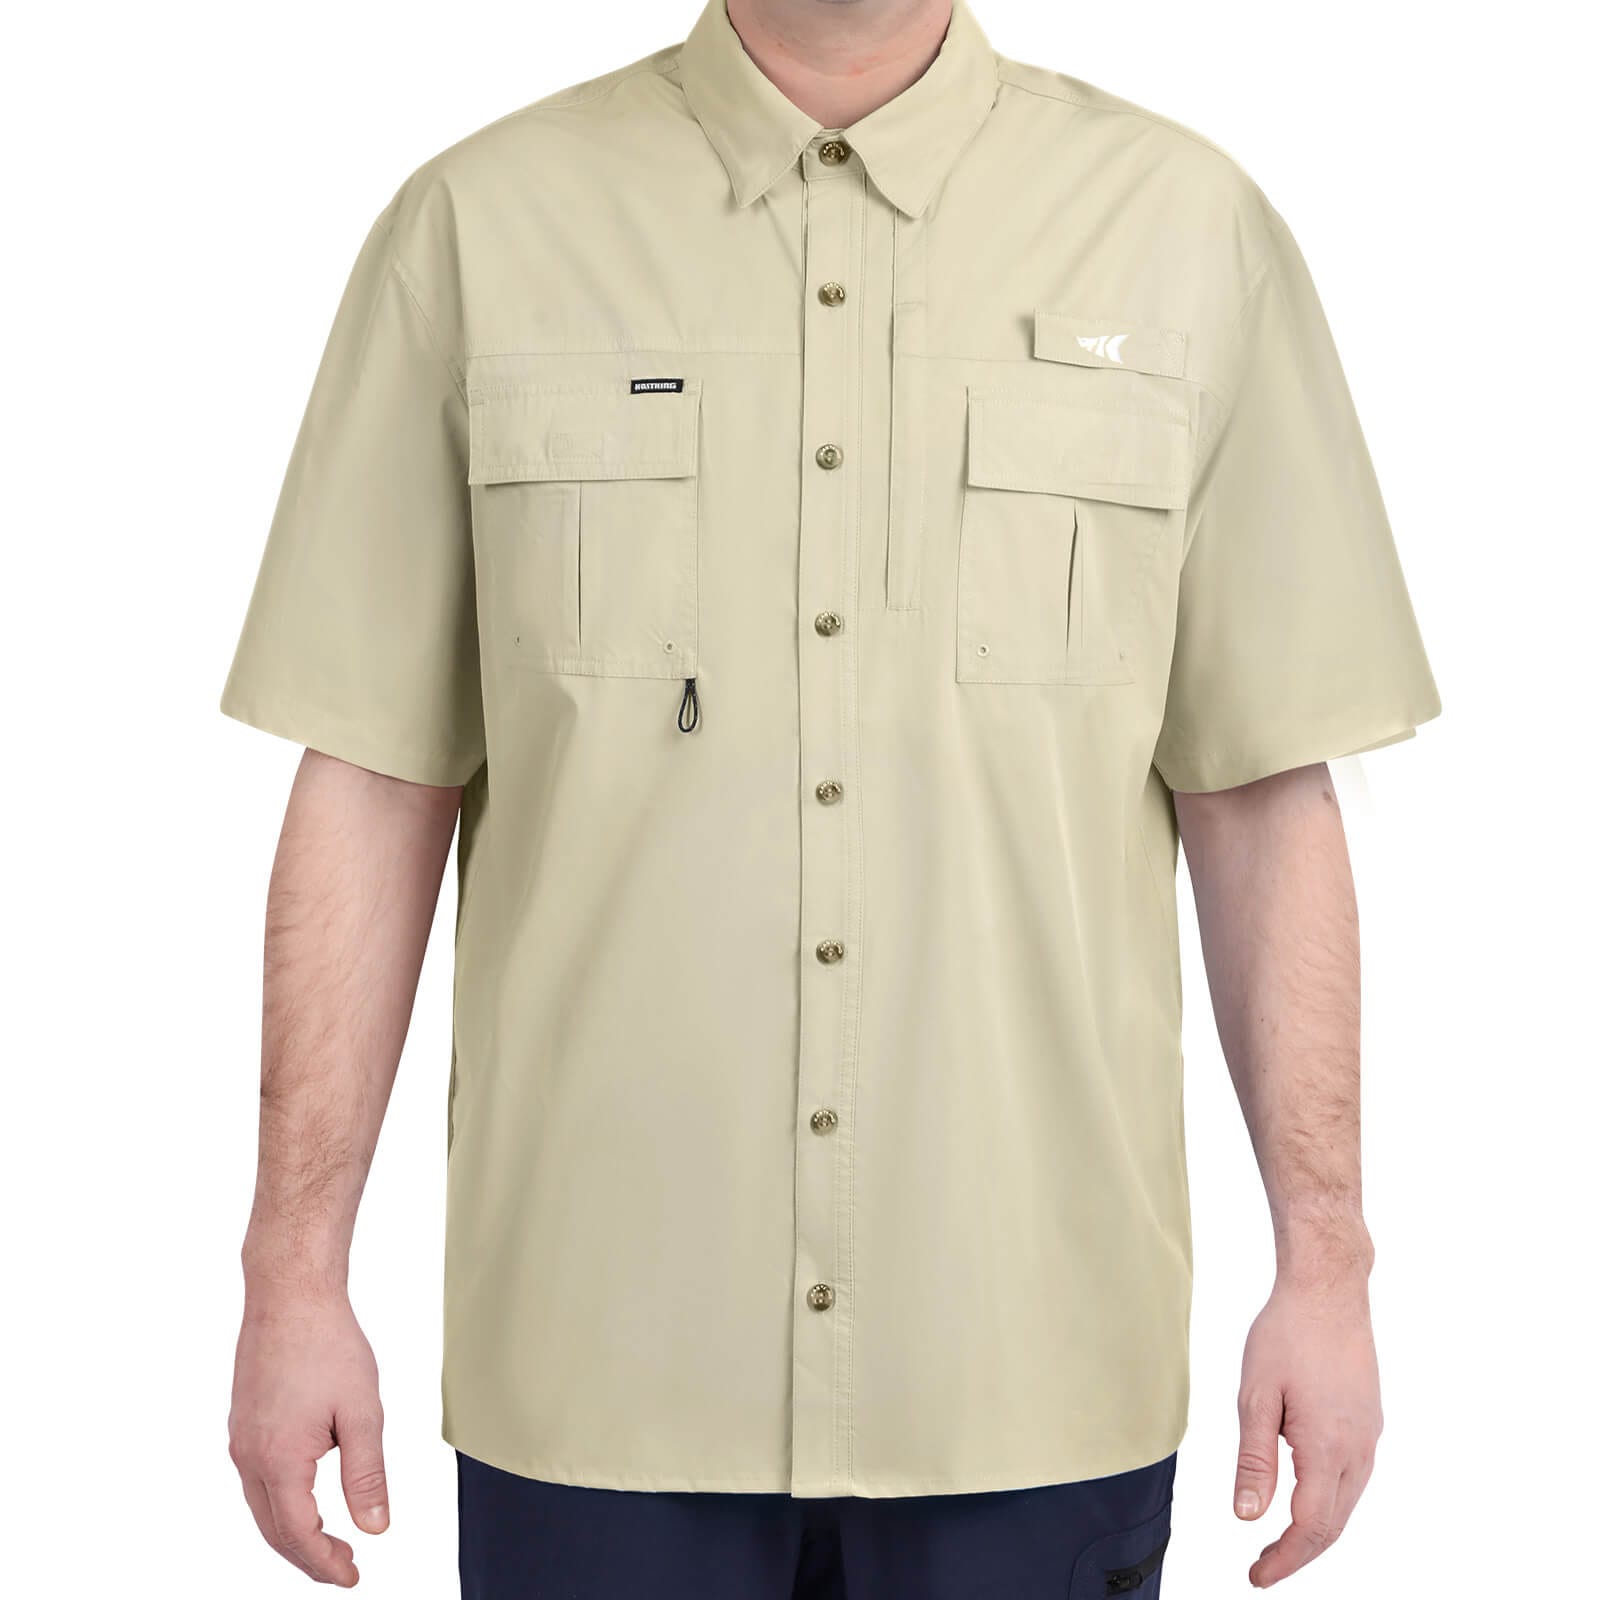 KastKing Casual Short Sleeve Button Down Shirts - Khaki / Small